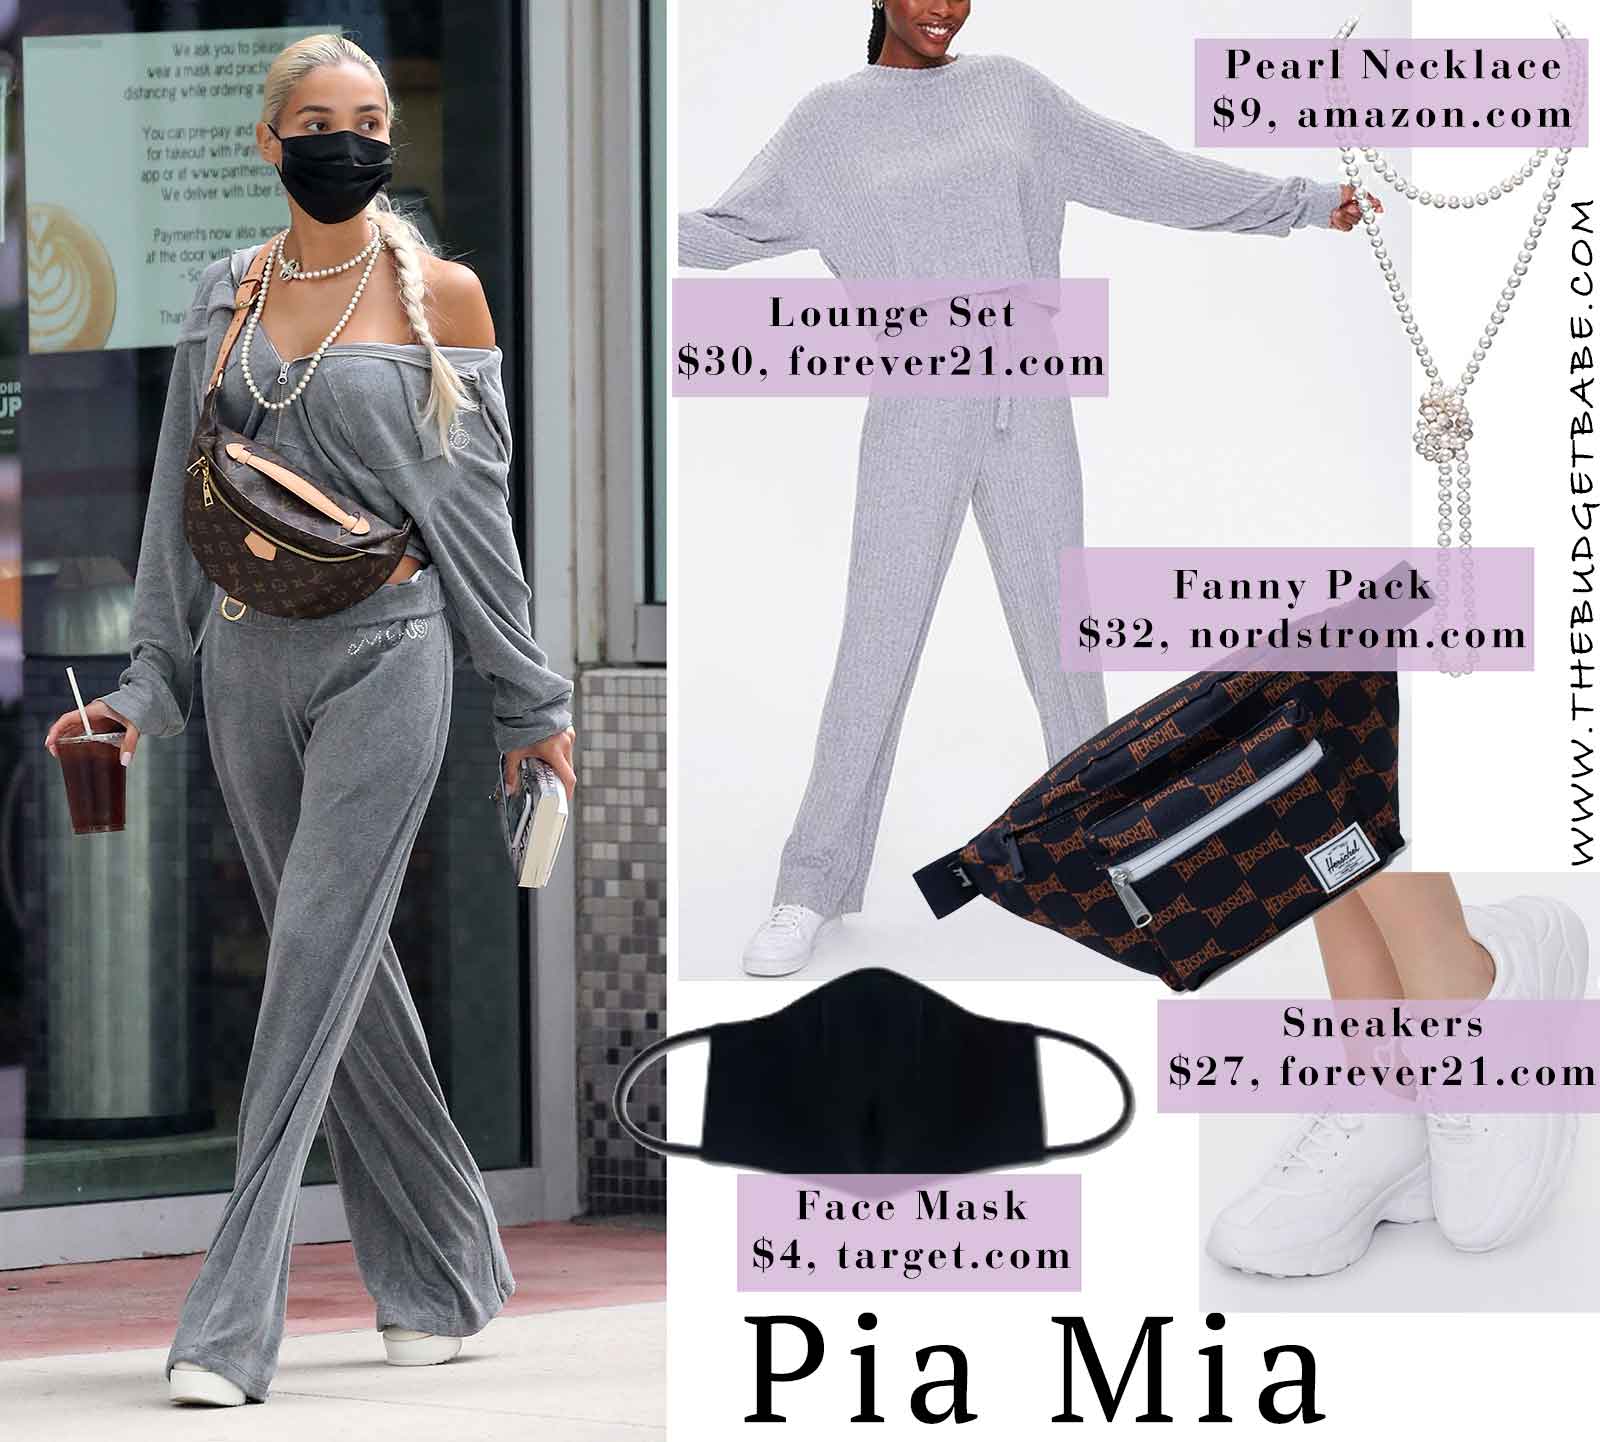 Pia Mia loungewear set and platform sneakers